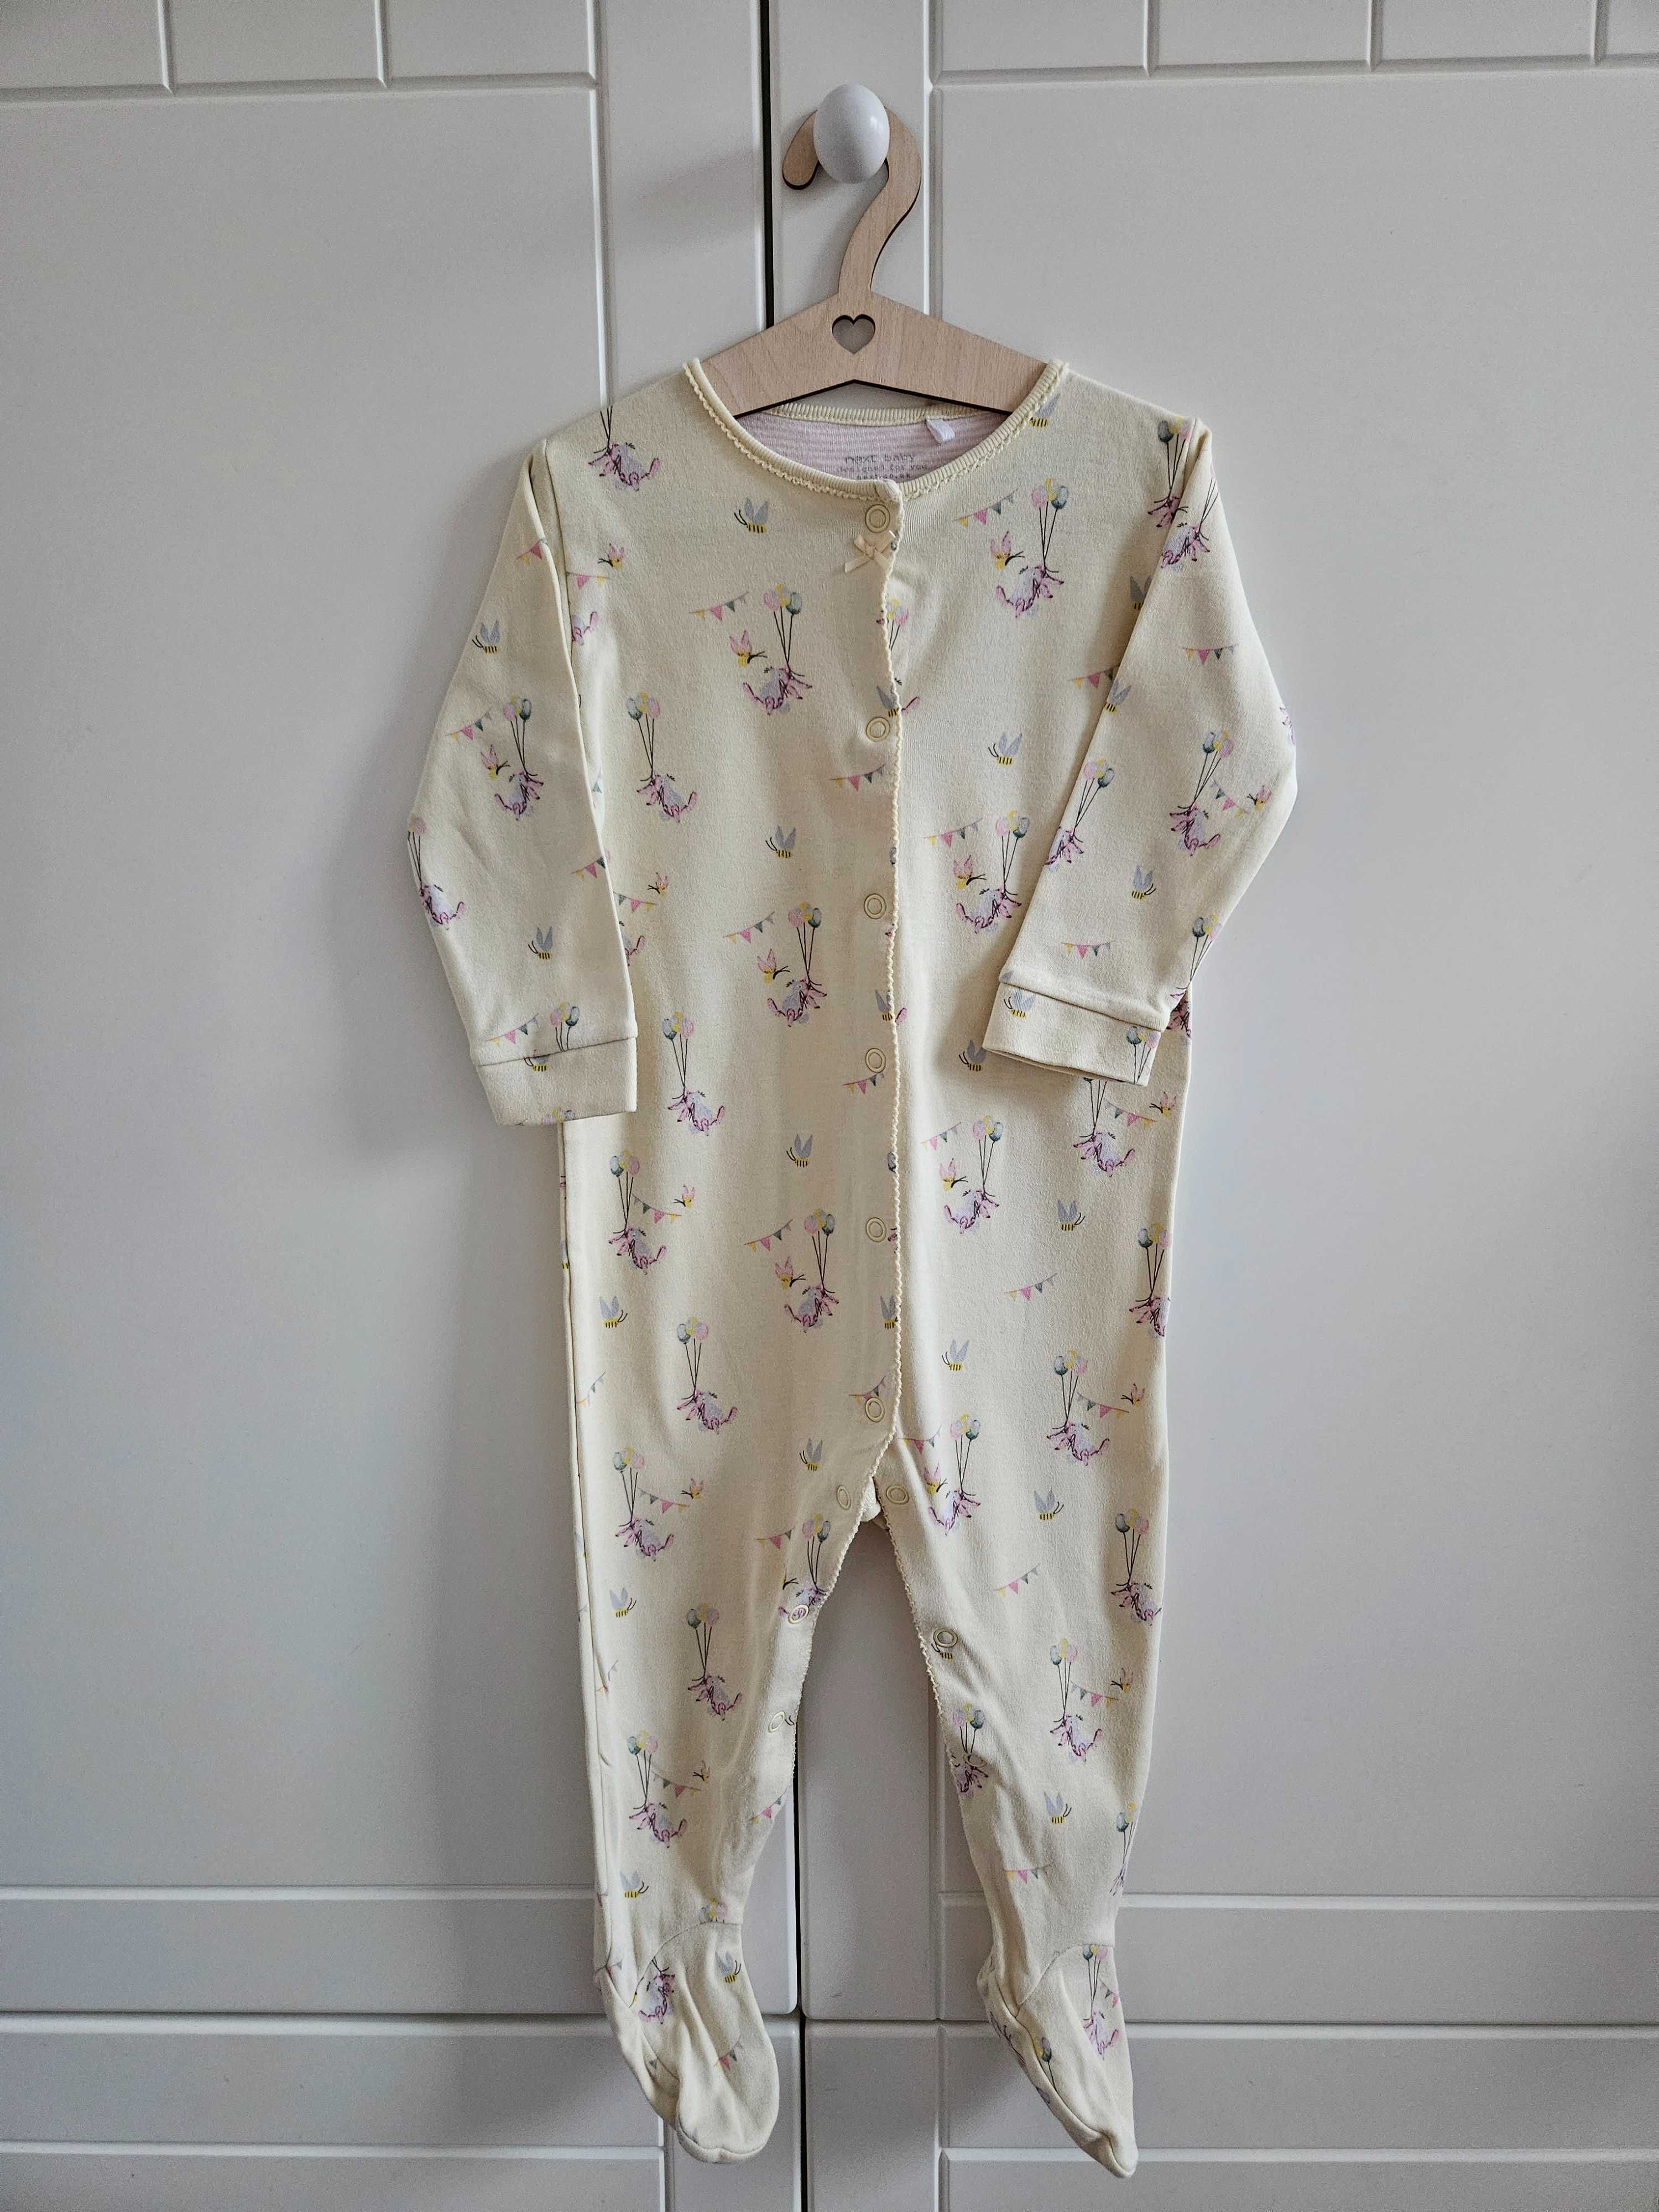 Zestaw ubranek 80: legginsy i piżamka, kwiaty